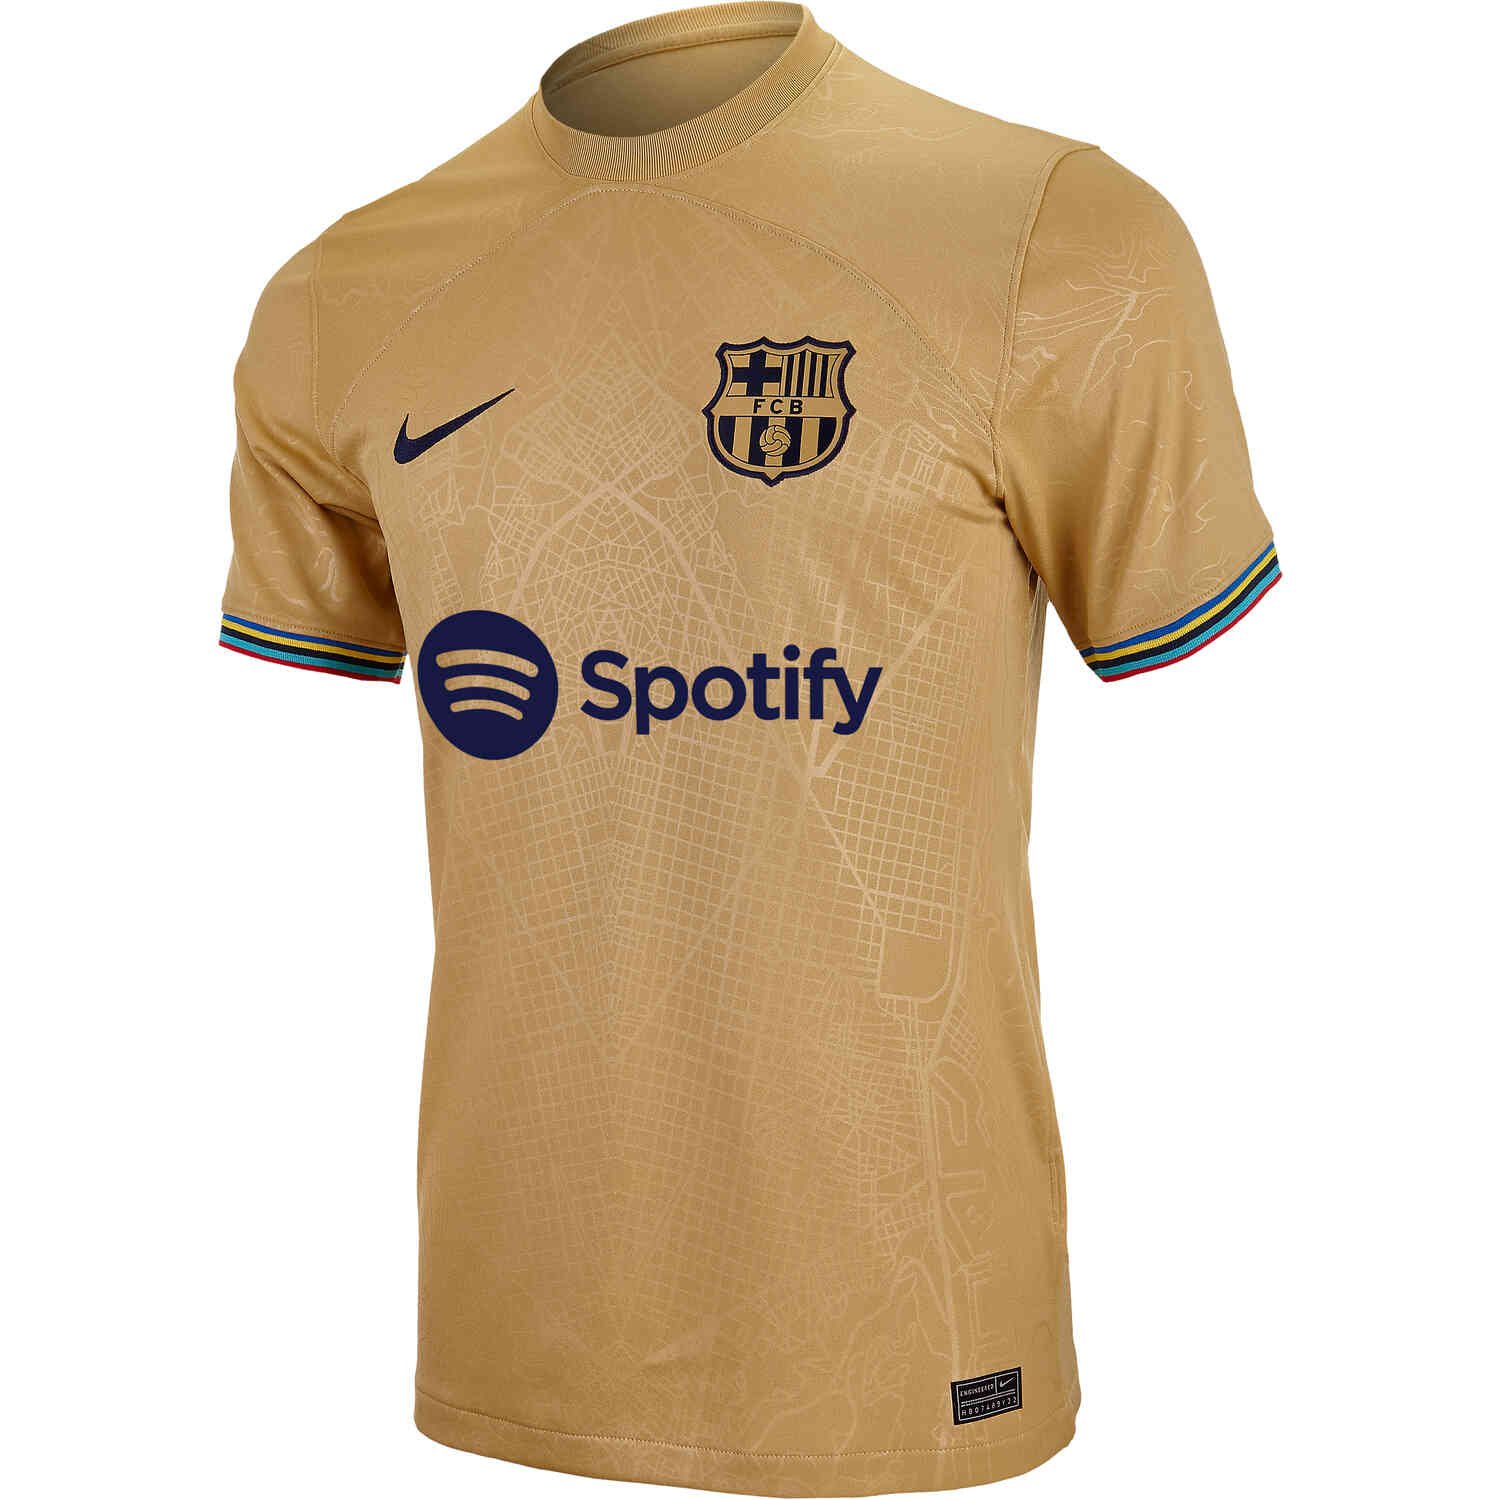 Alba Jordi Alba Spain Jersey Authentic 2019 Player Issue Size XL Shirt FI6250 ig93 